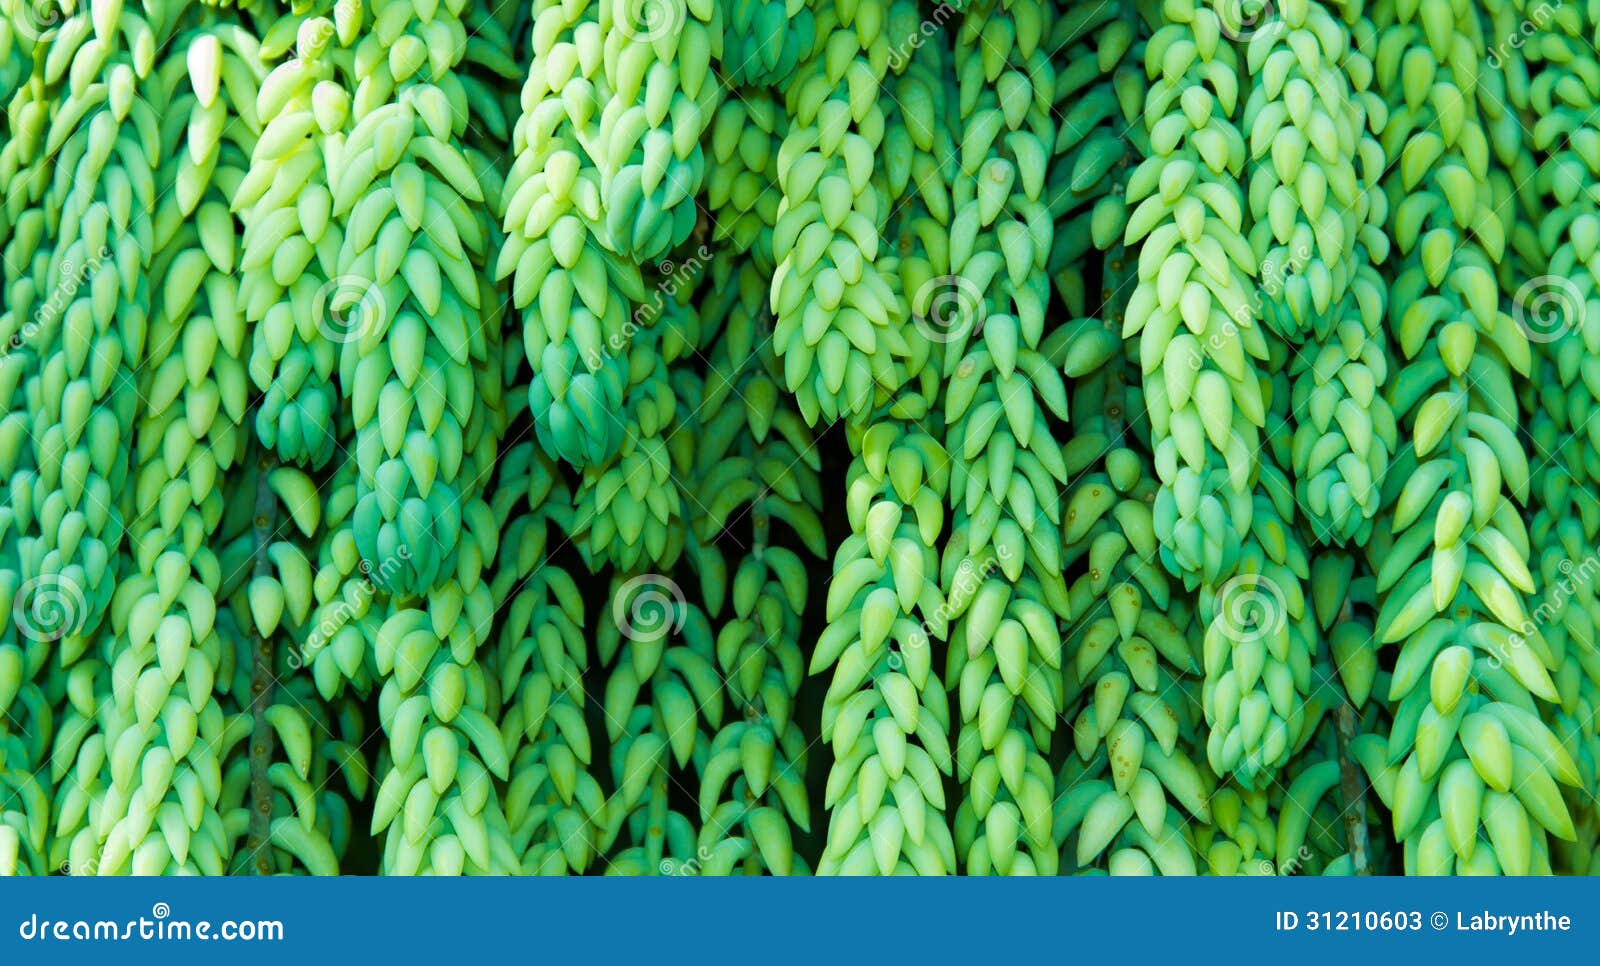 http://thumbs.dreamstime.com/z/succulent-plants-fleshy-light-green-foliage-31210603.jpg